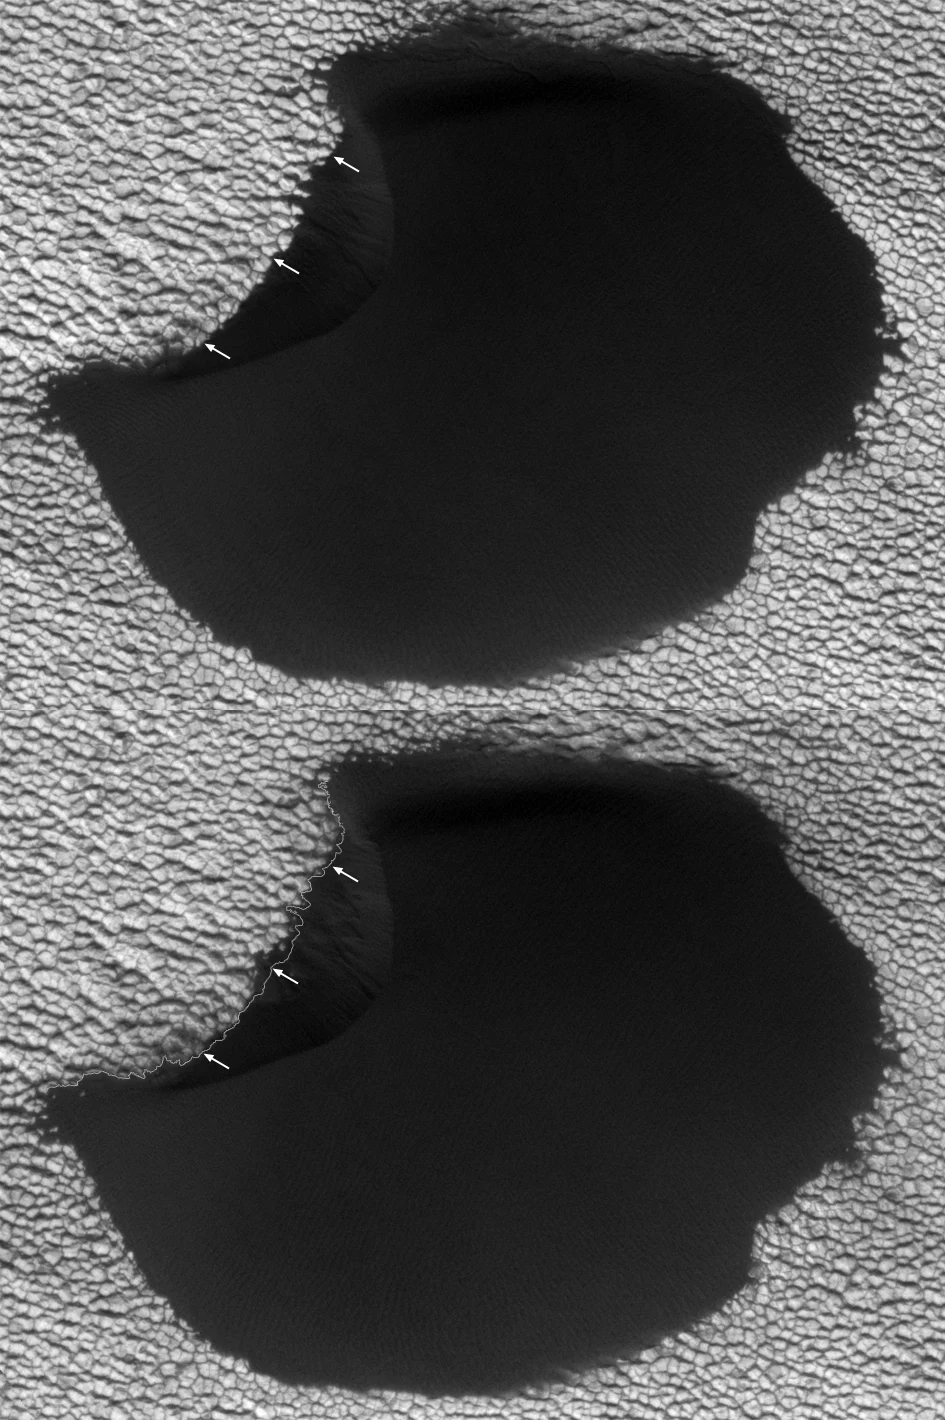 Mars-MRO-Sanddune-NASA